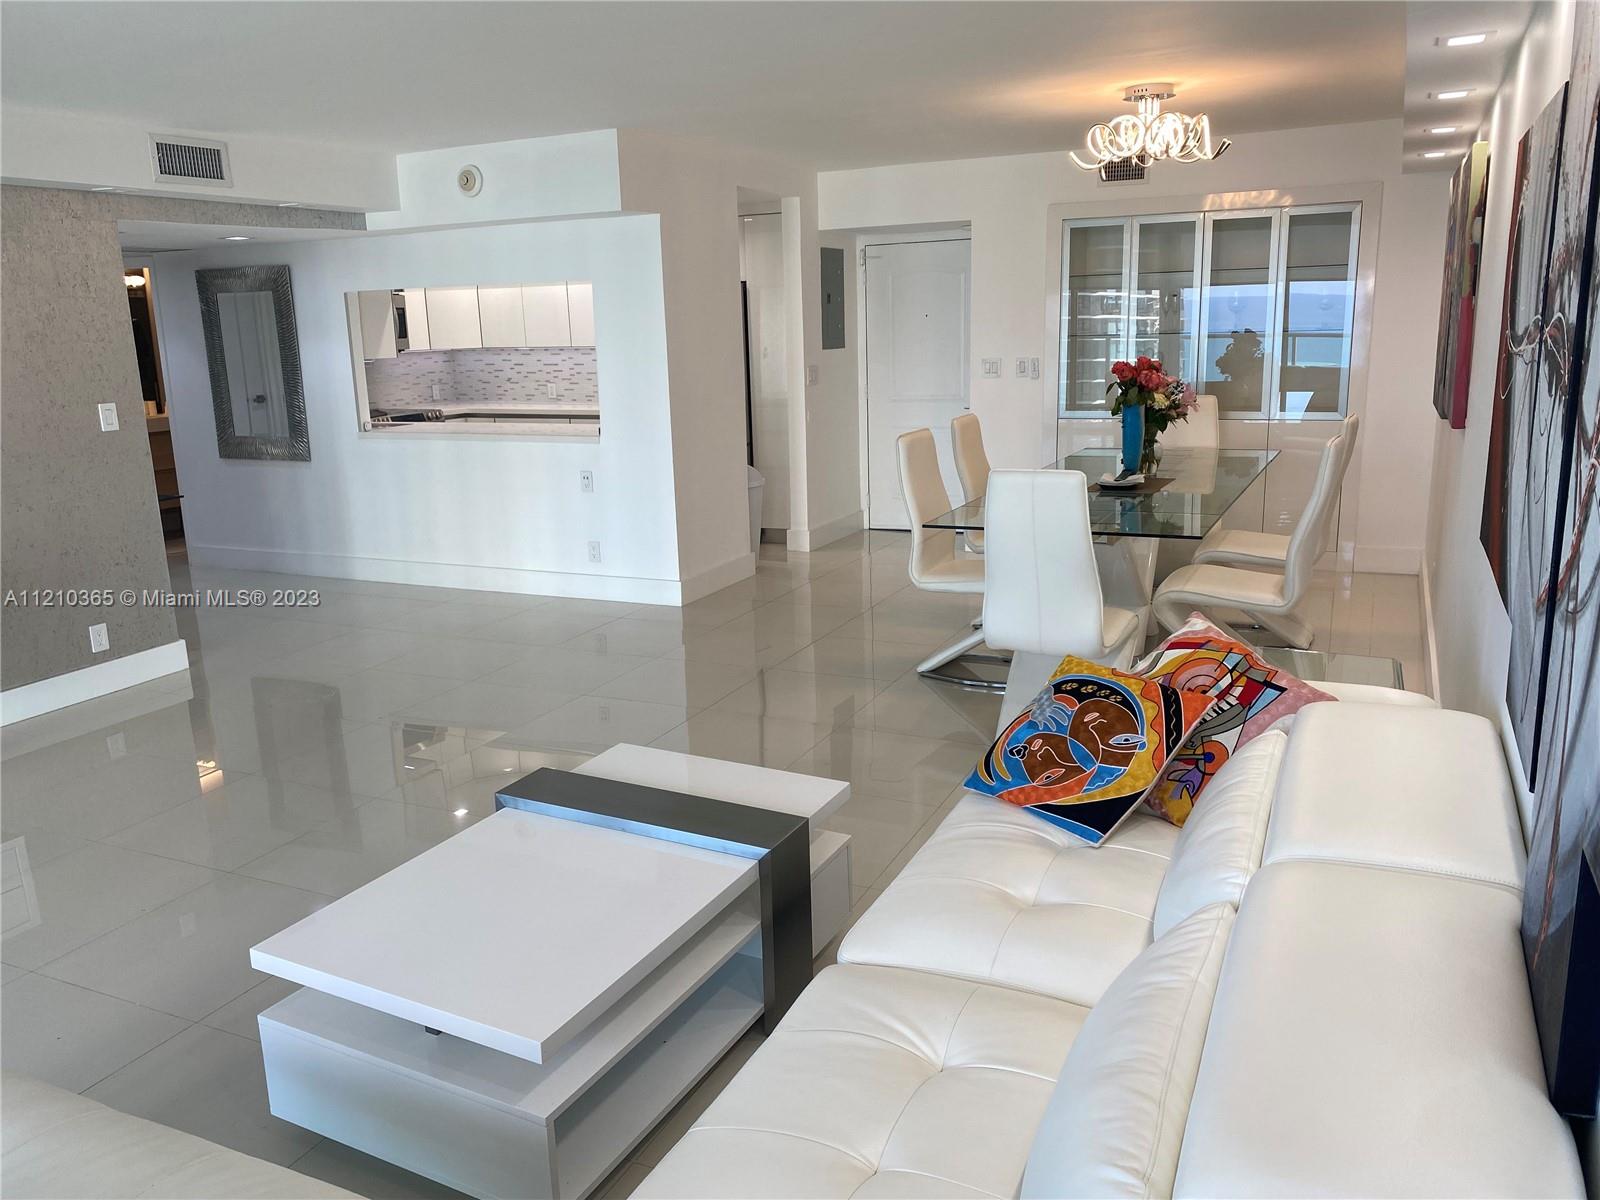 Rental Property at 100 Bayview Dr 1815, Sunny Isles Beach, Miami-Dade County, Florida - Bedrooms: 2 
Bathrooms: 2  - $4,200 MO.